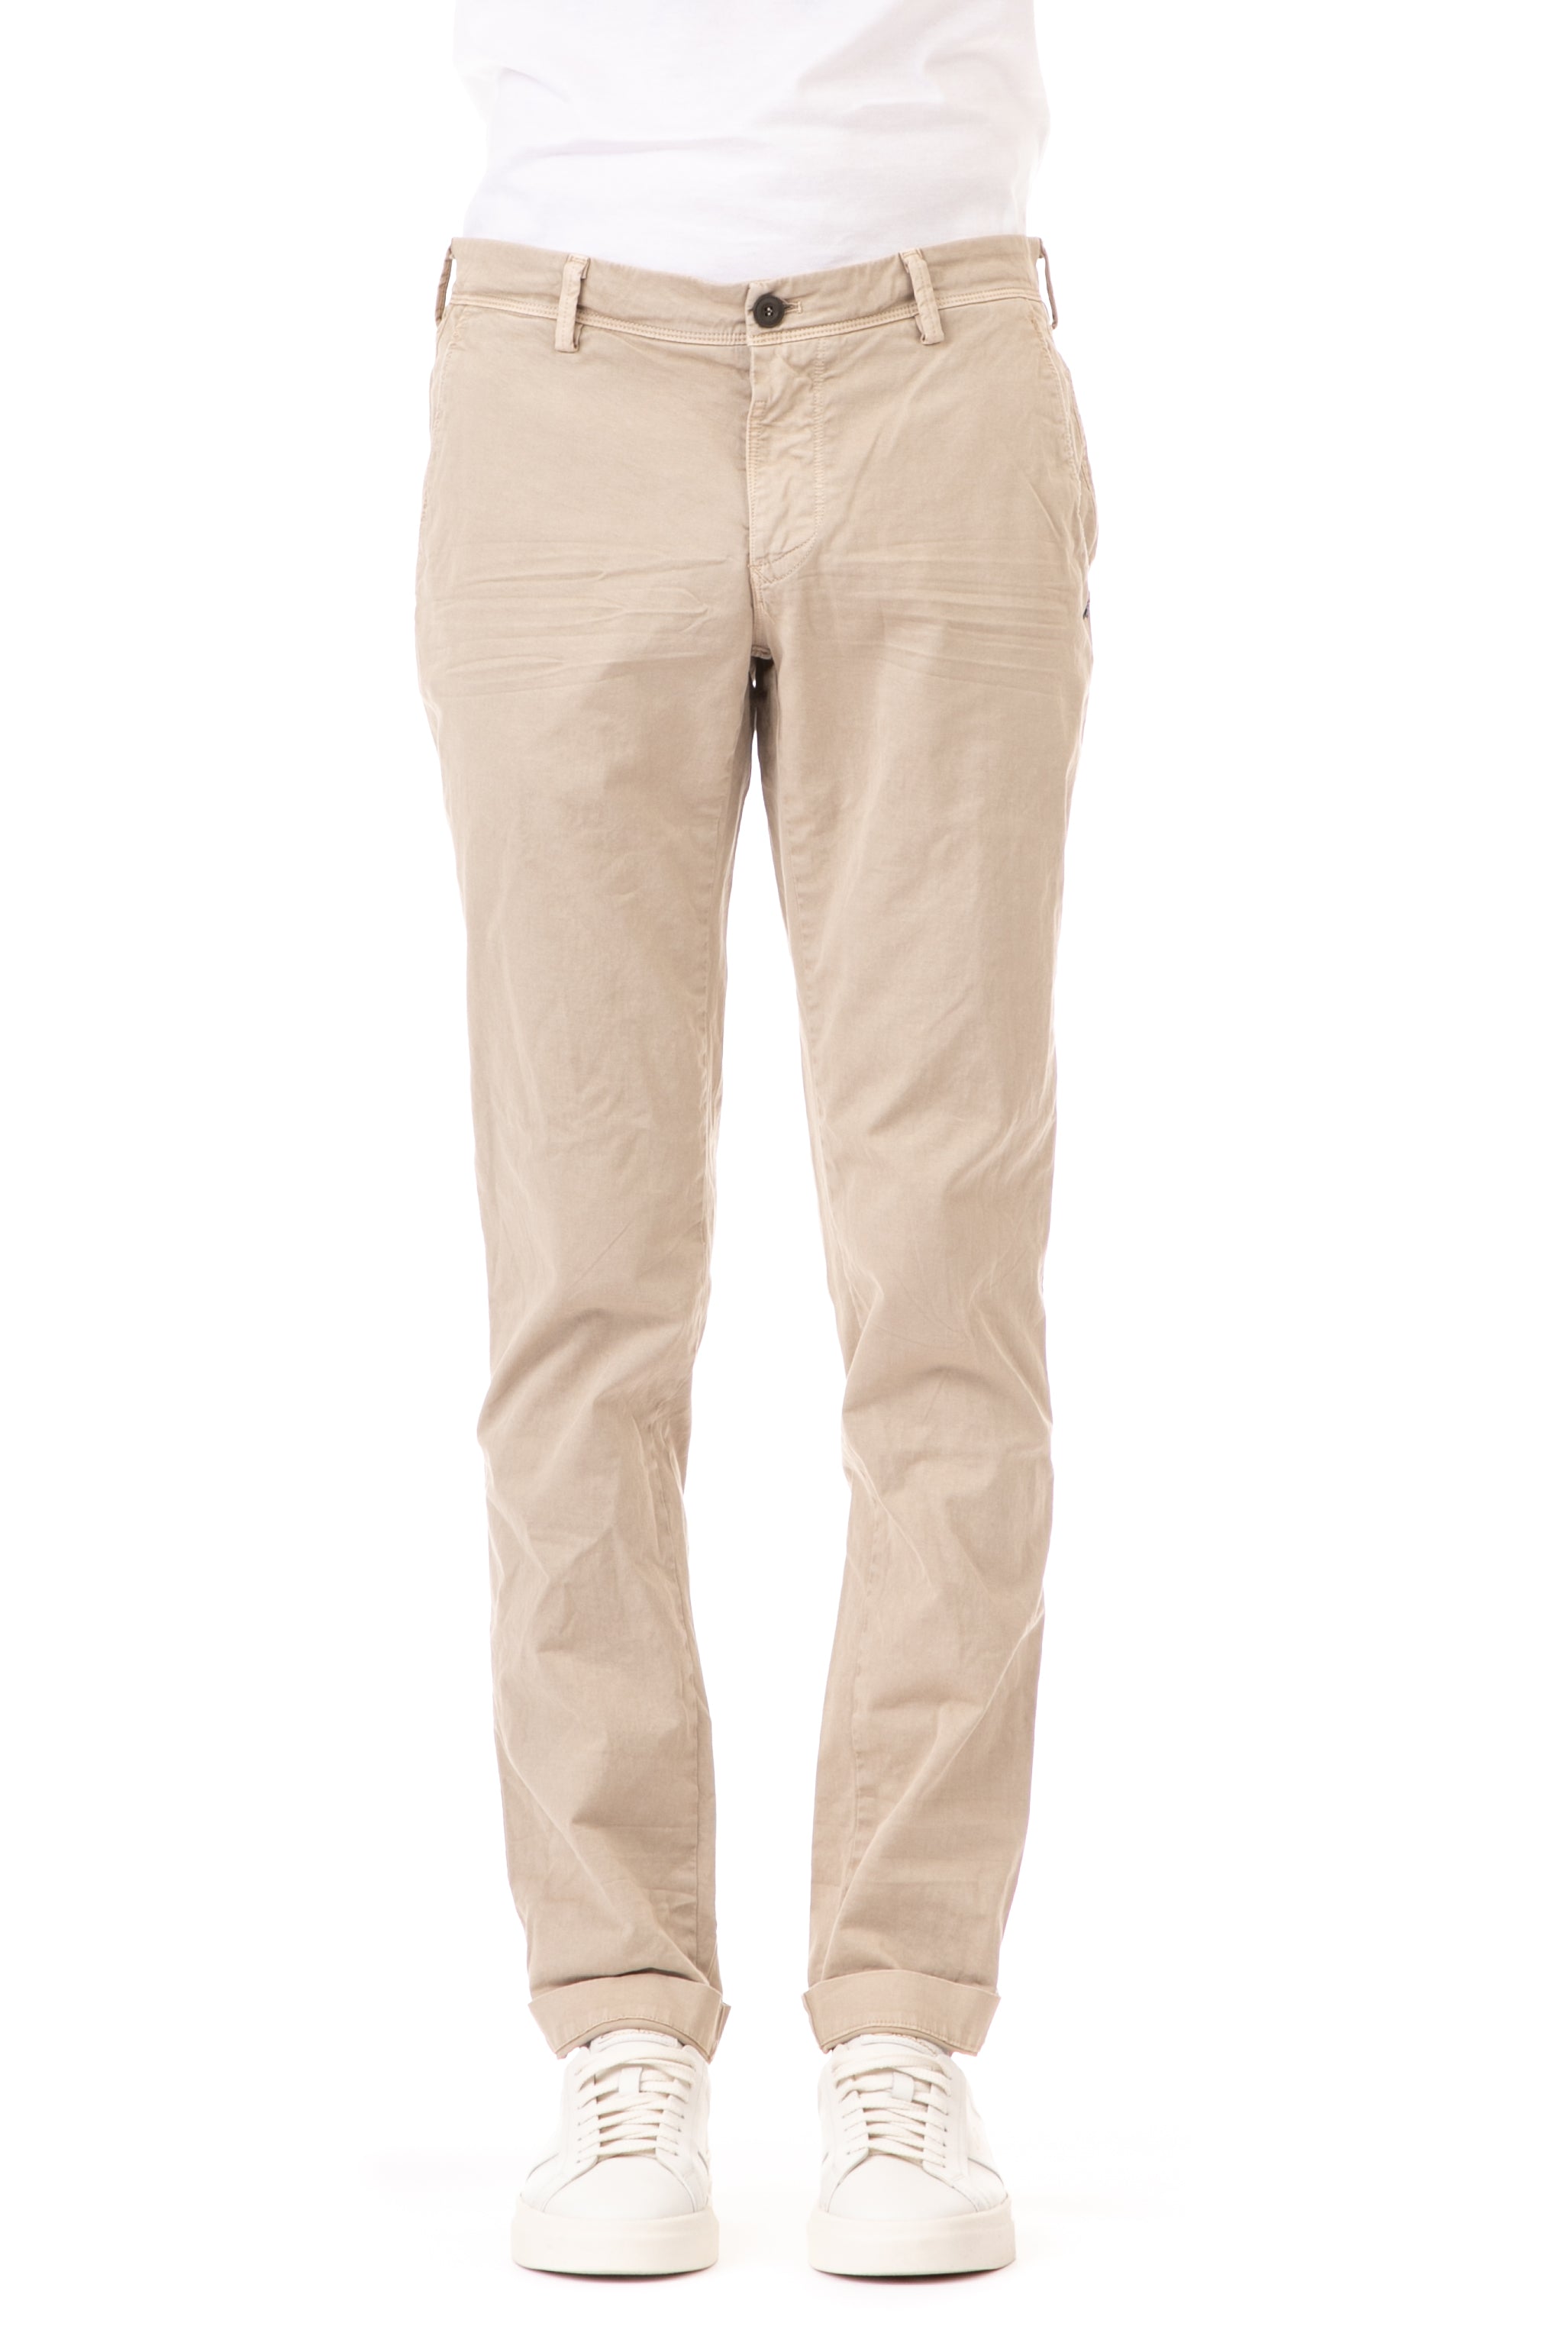 Pantalone in cotone-lyocell modello eisenhower